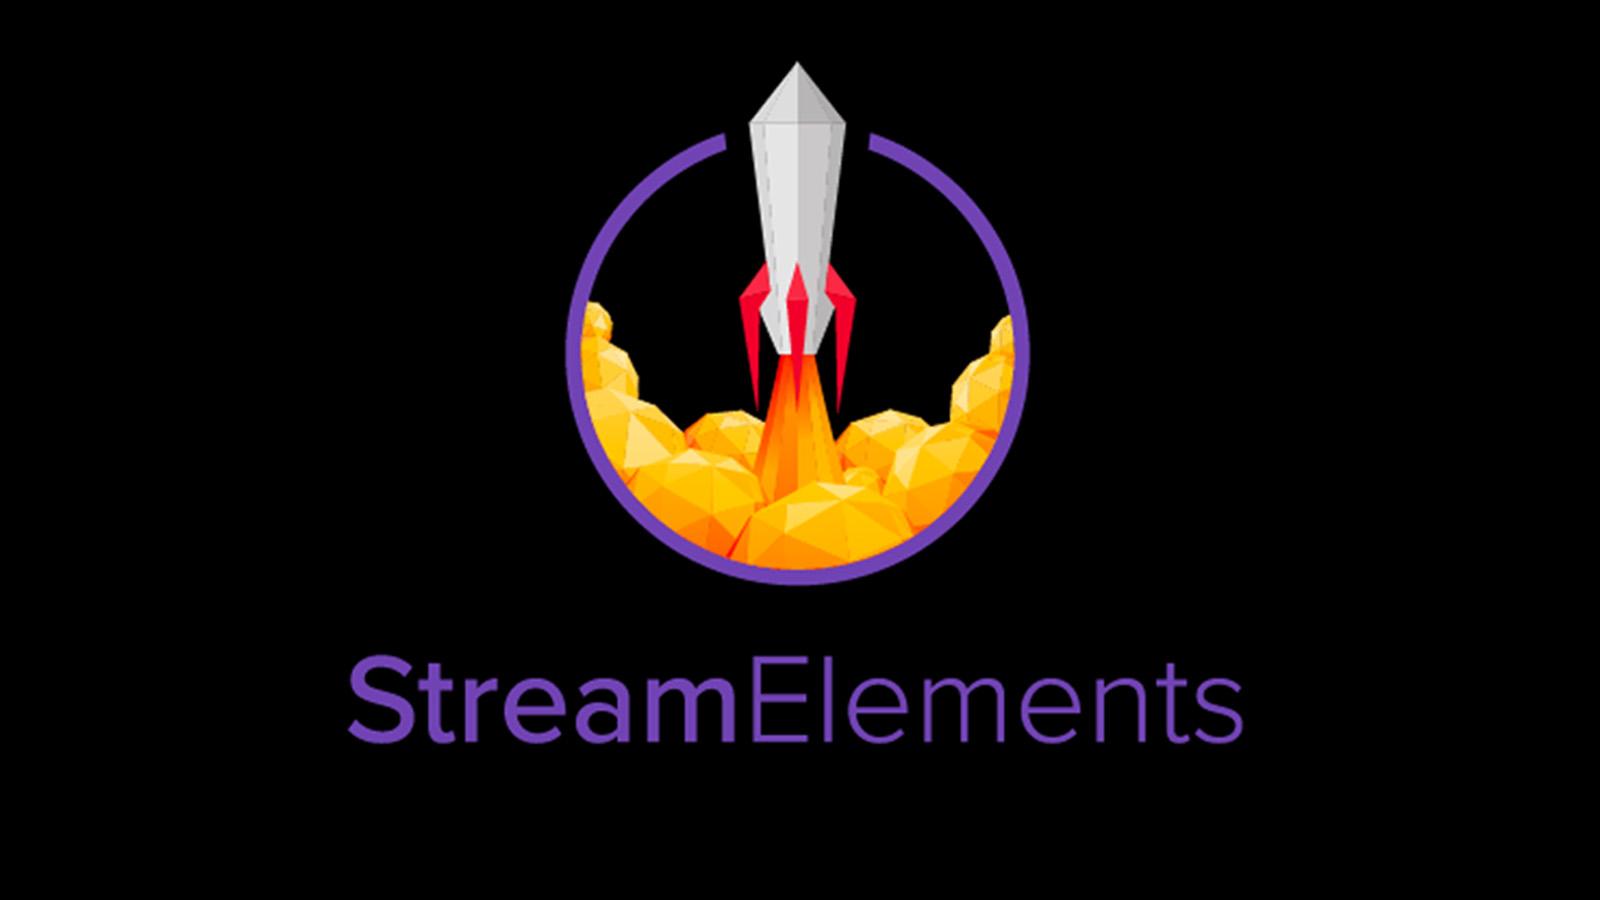 StreamElements logo on black background